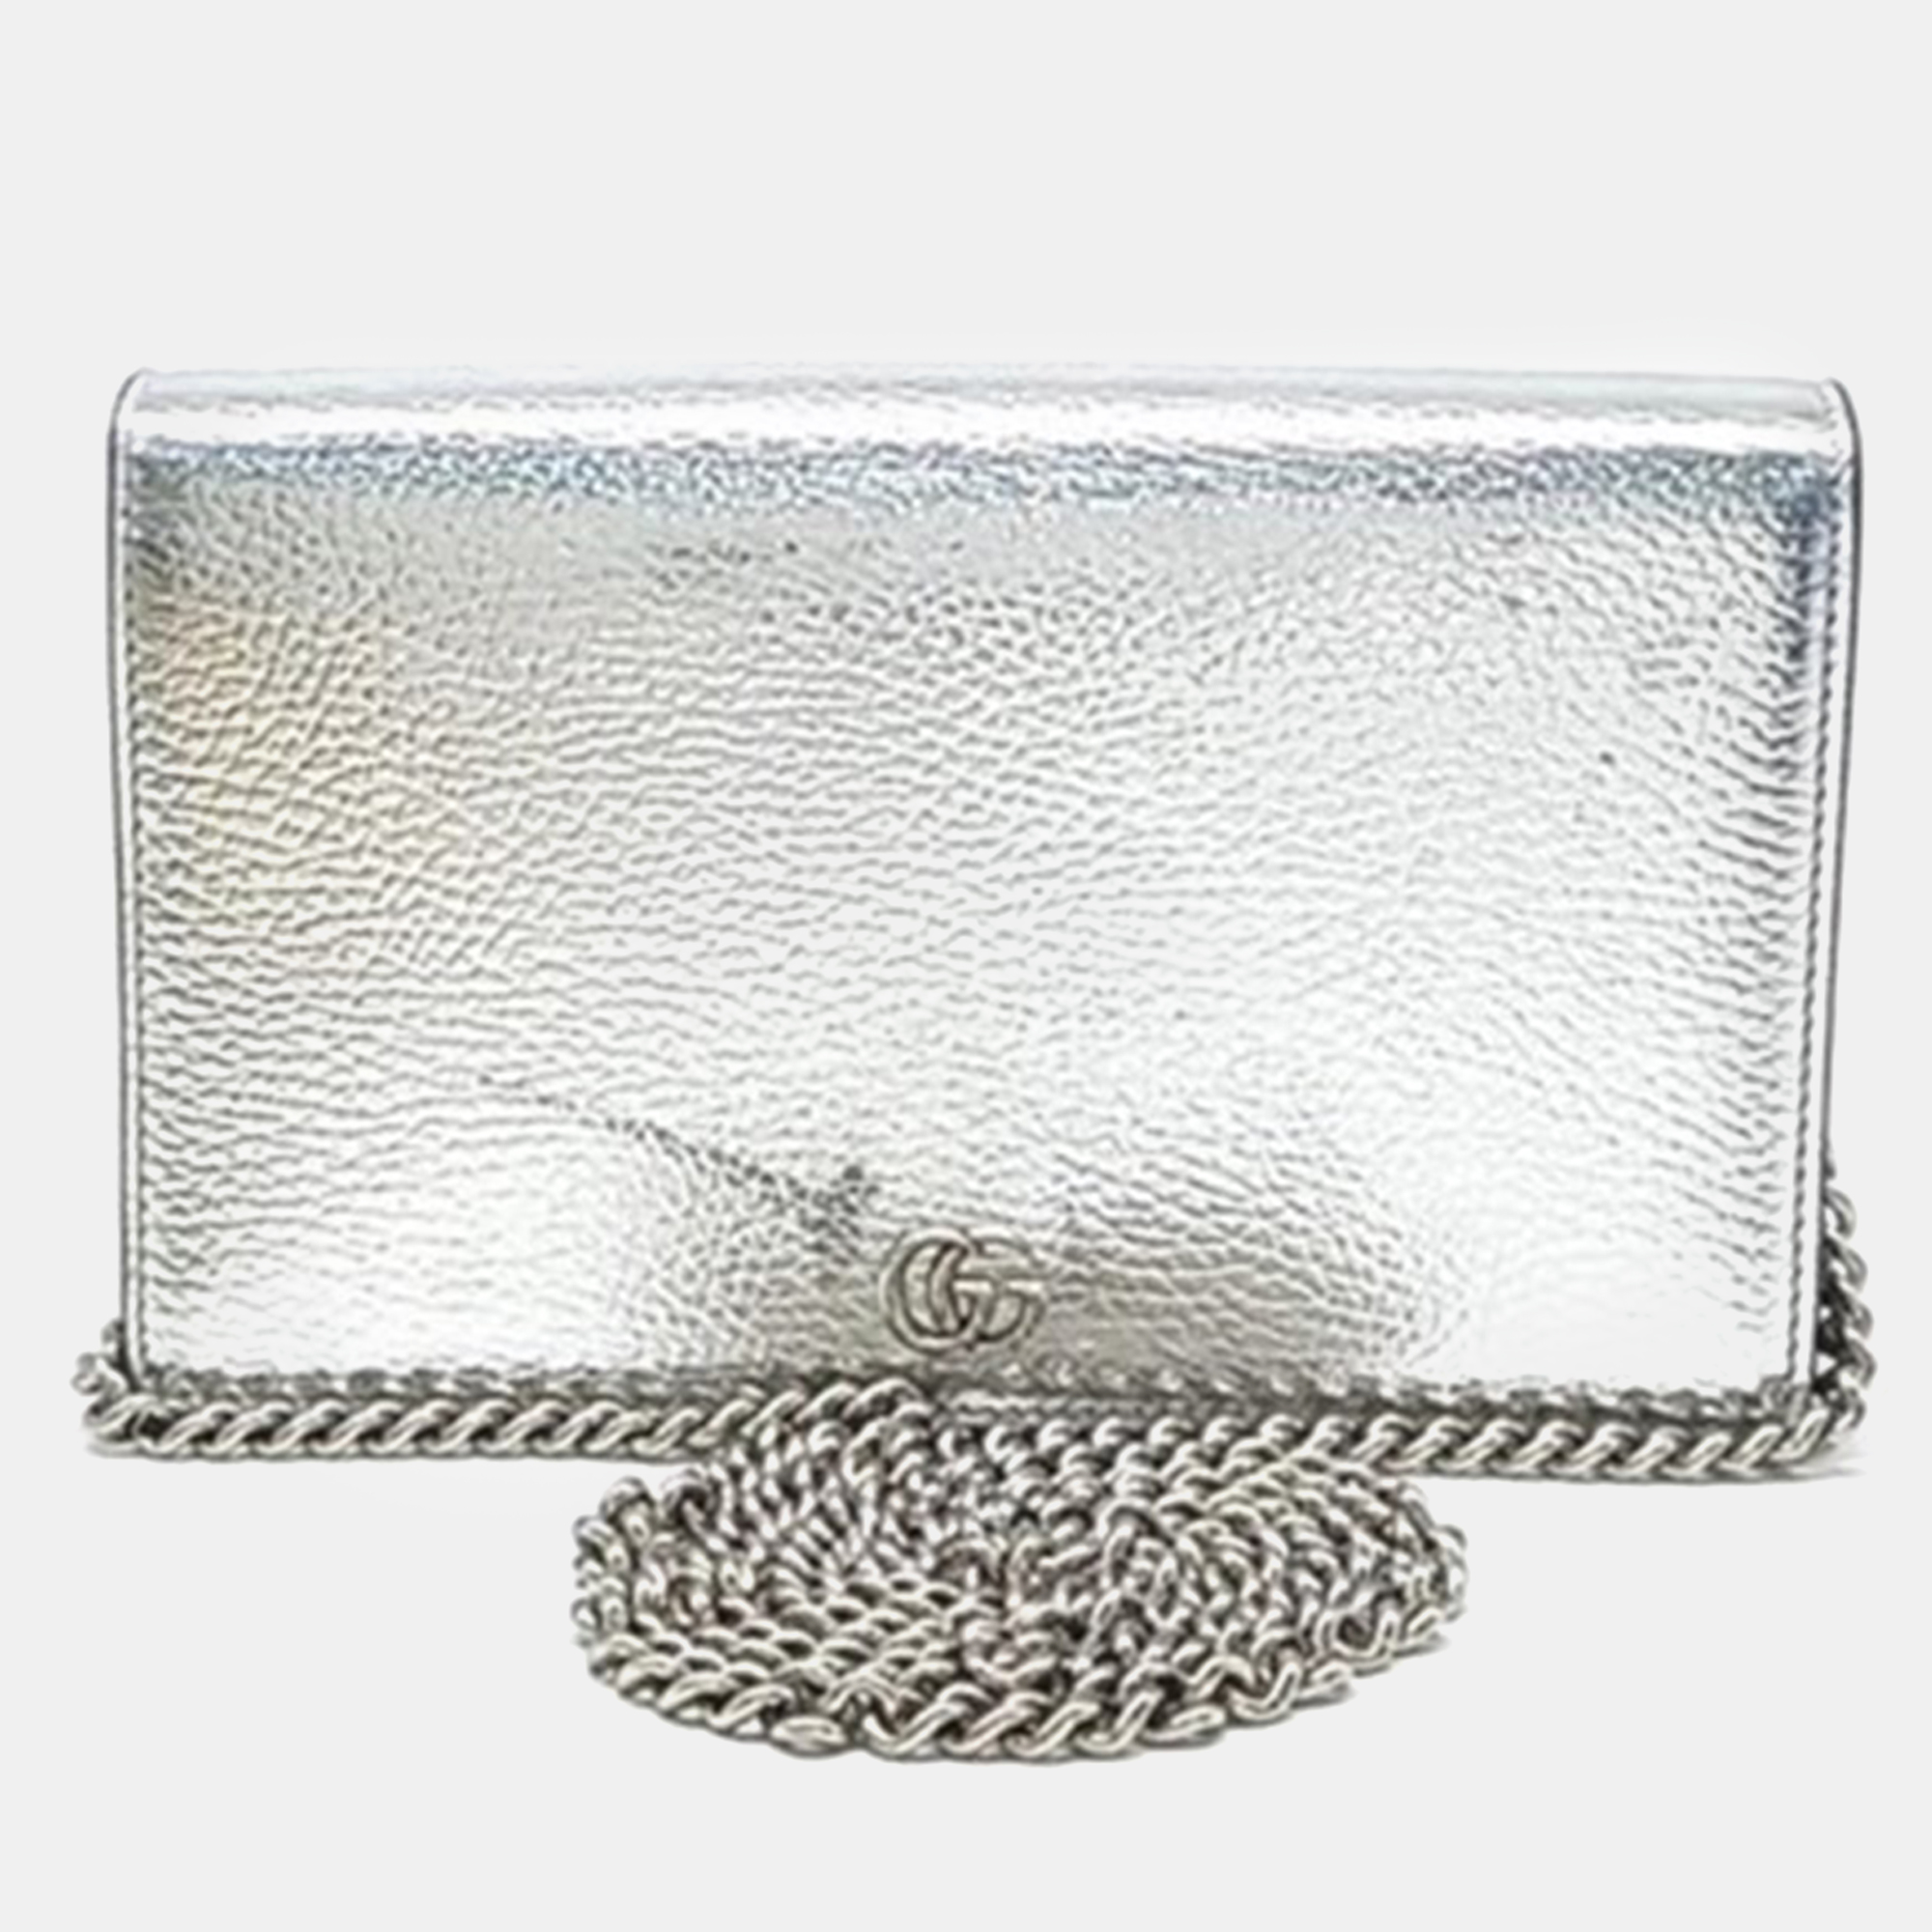 Gucci silver leather gg marmont mini crossbody bag